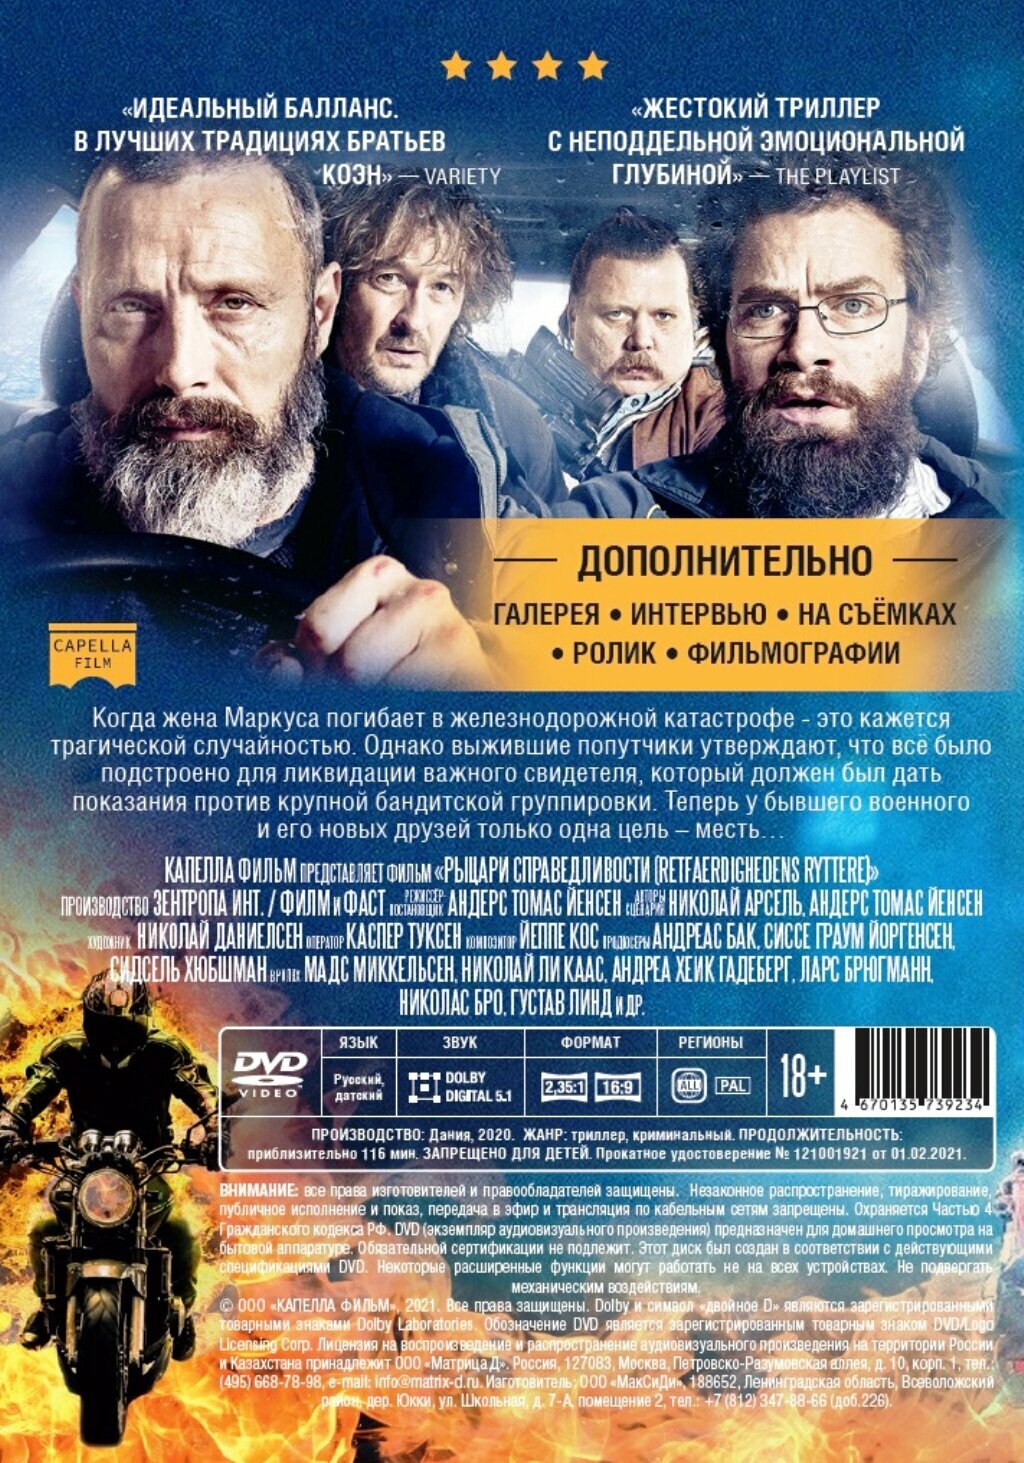 DVD Рыцари справедливости + Бонус: доп.метериалы НД плэй - фото №2